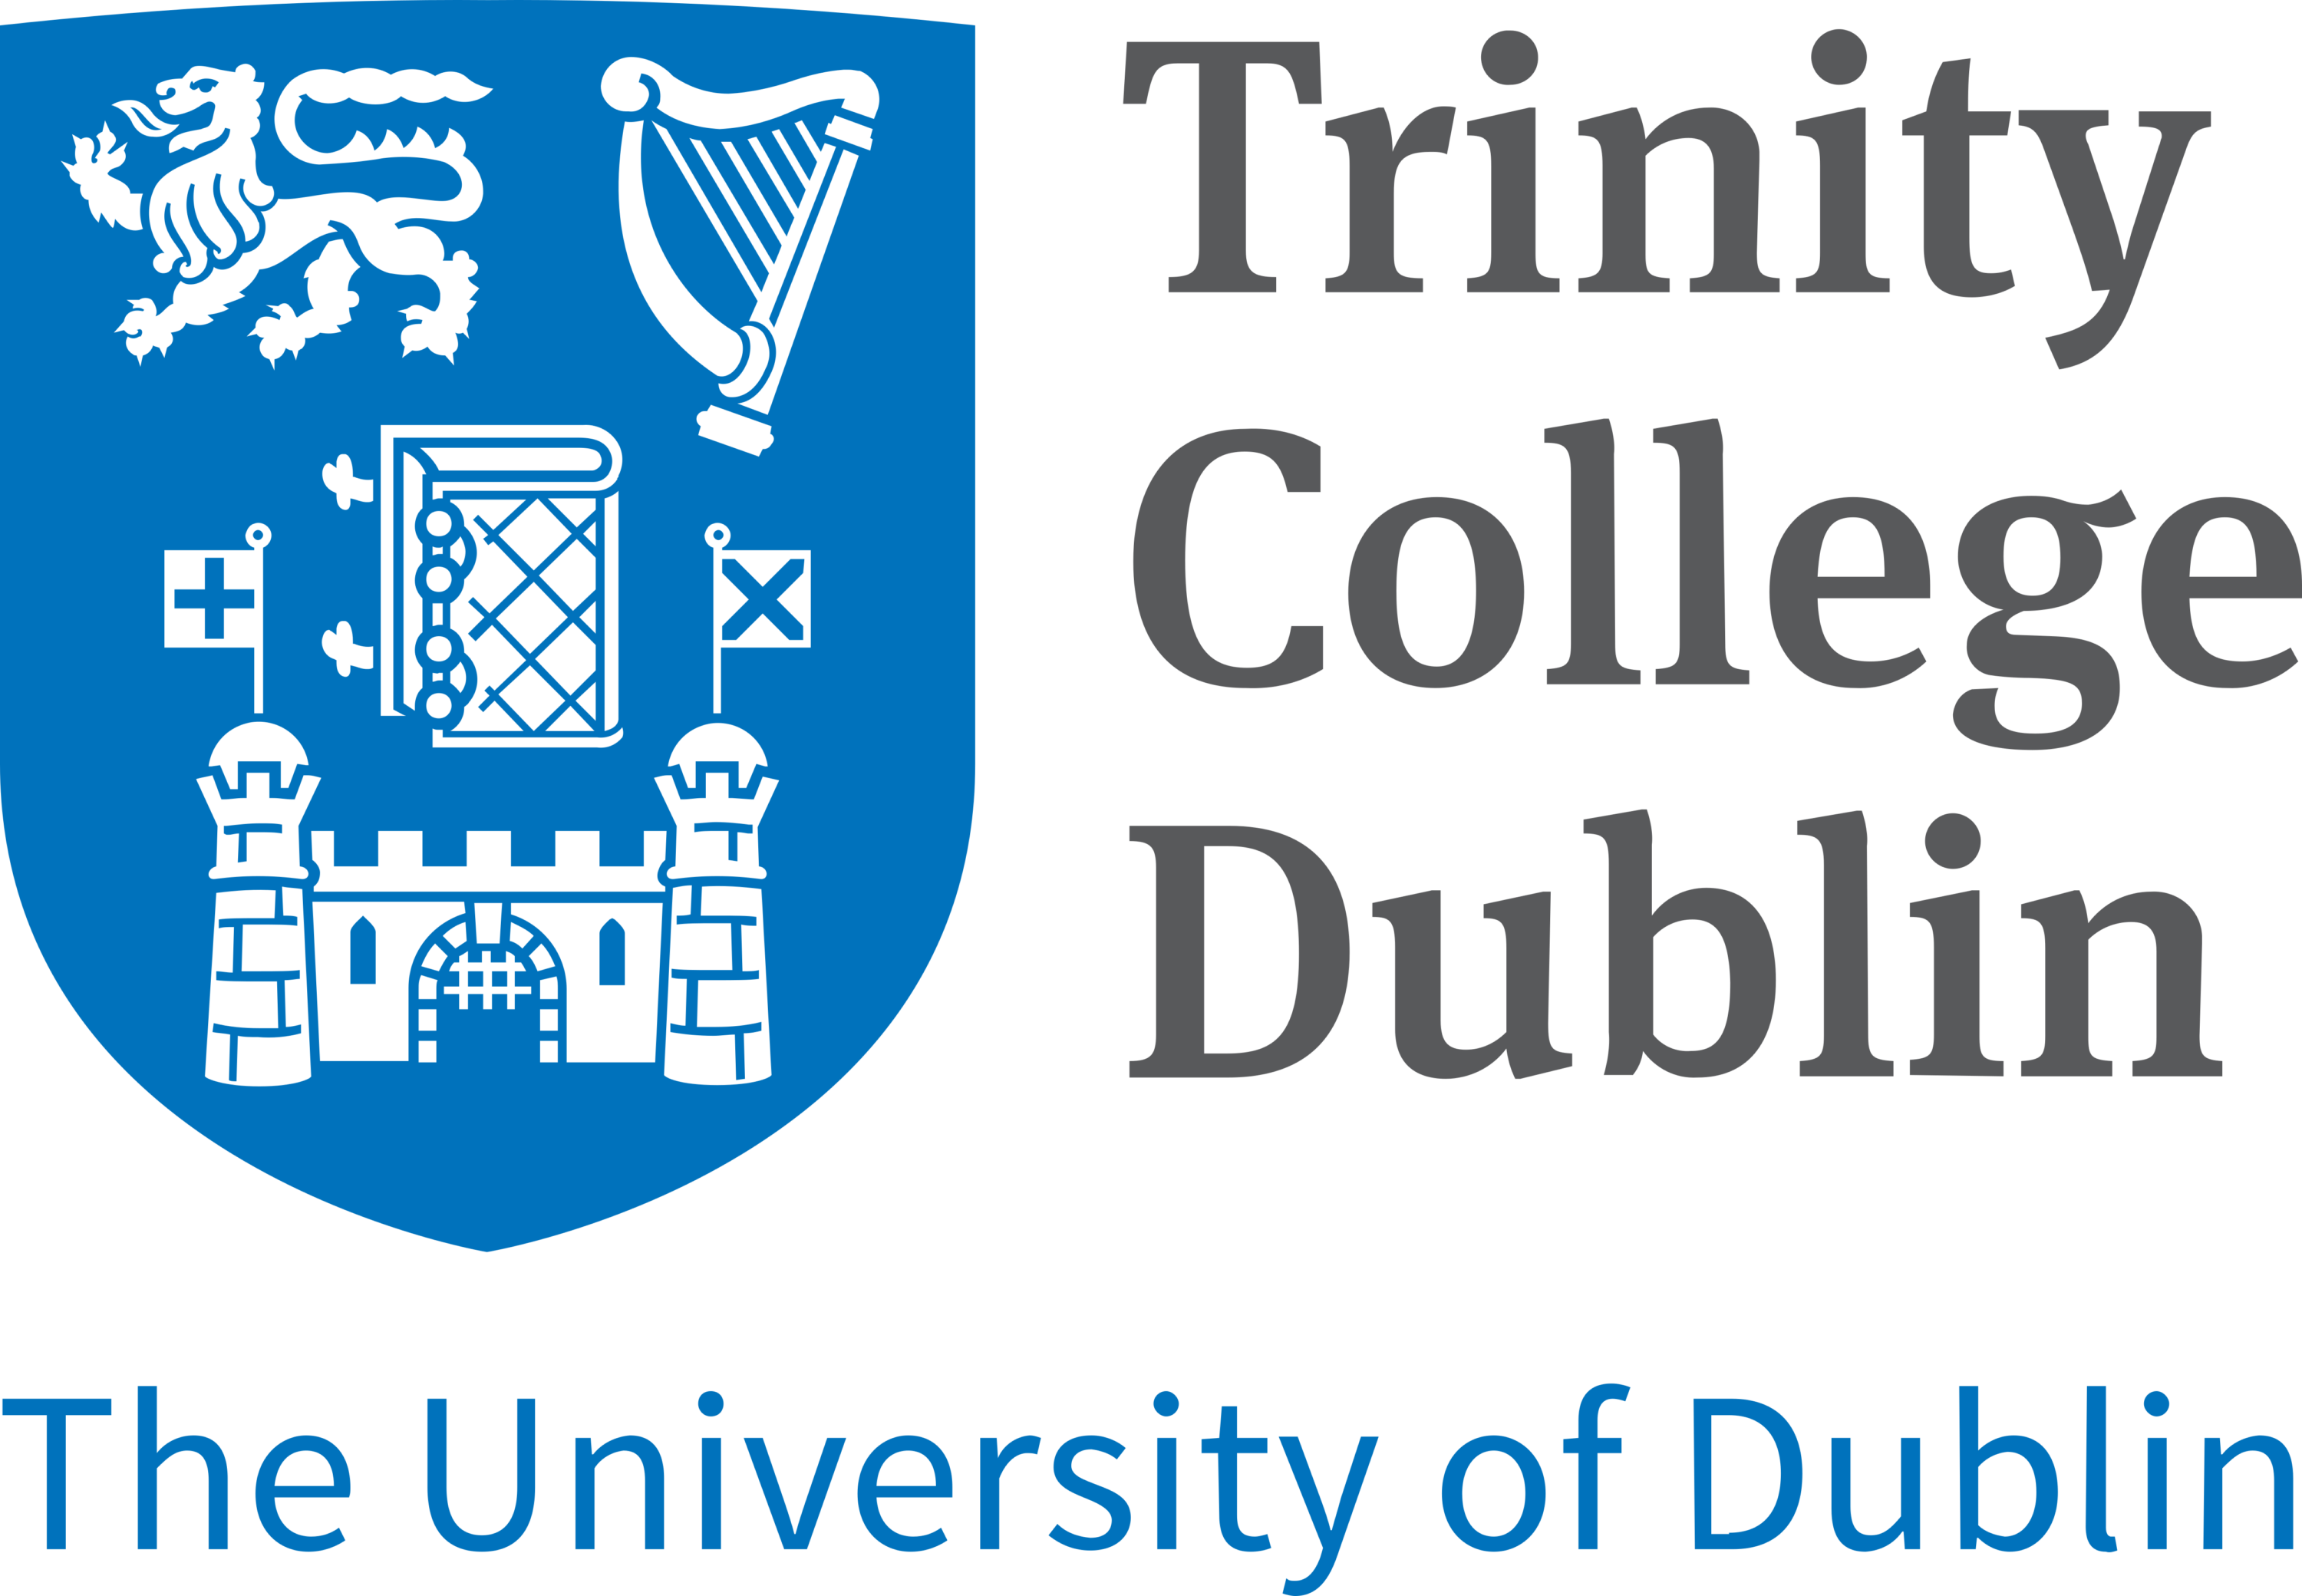 Trinity College Dublin Logo